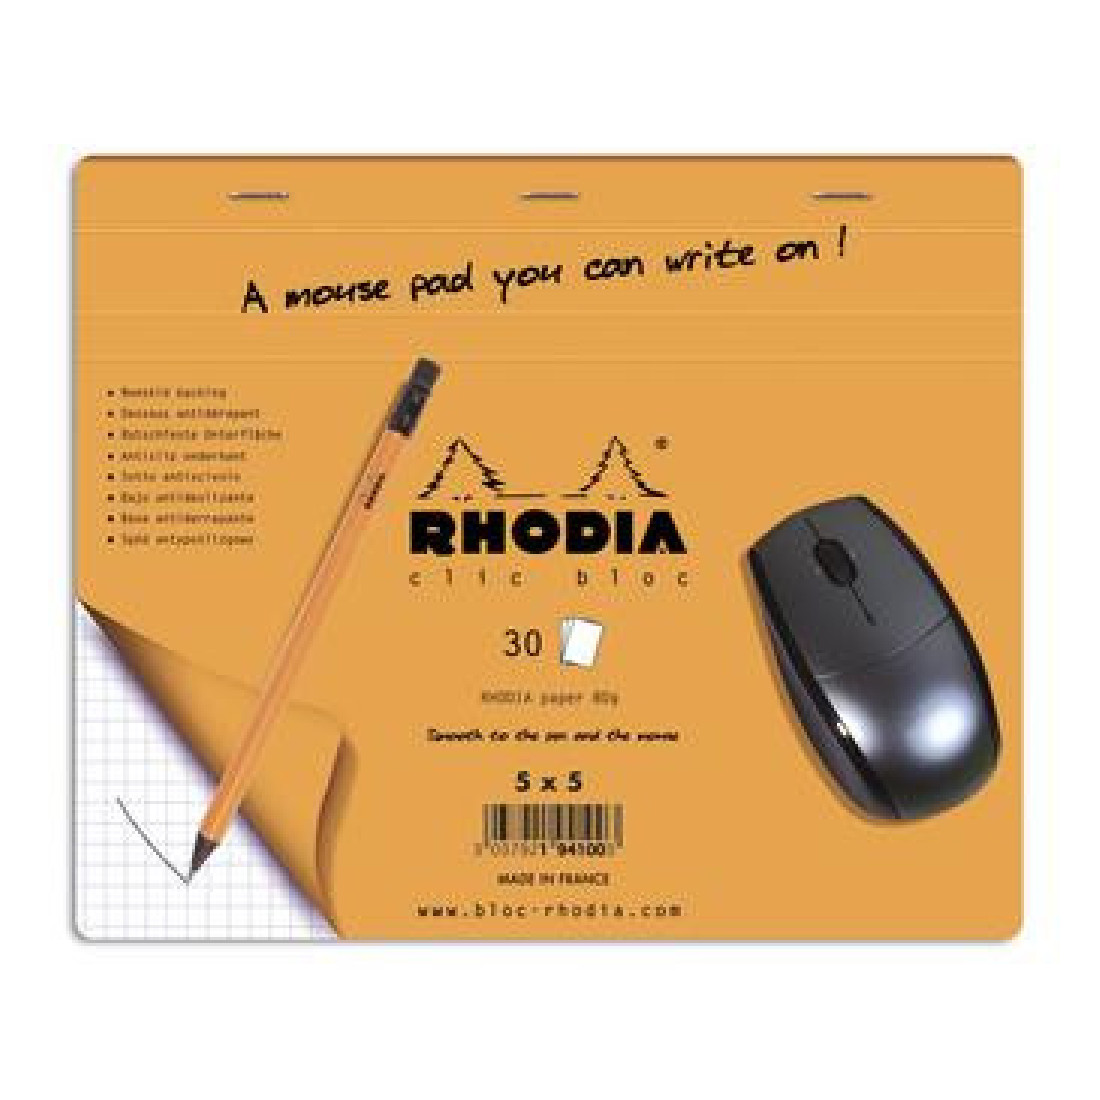 Rhodia click mouse pad 19 x 23 cm 5x5 squared 19410